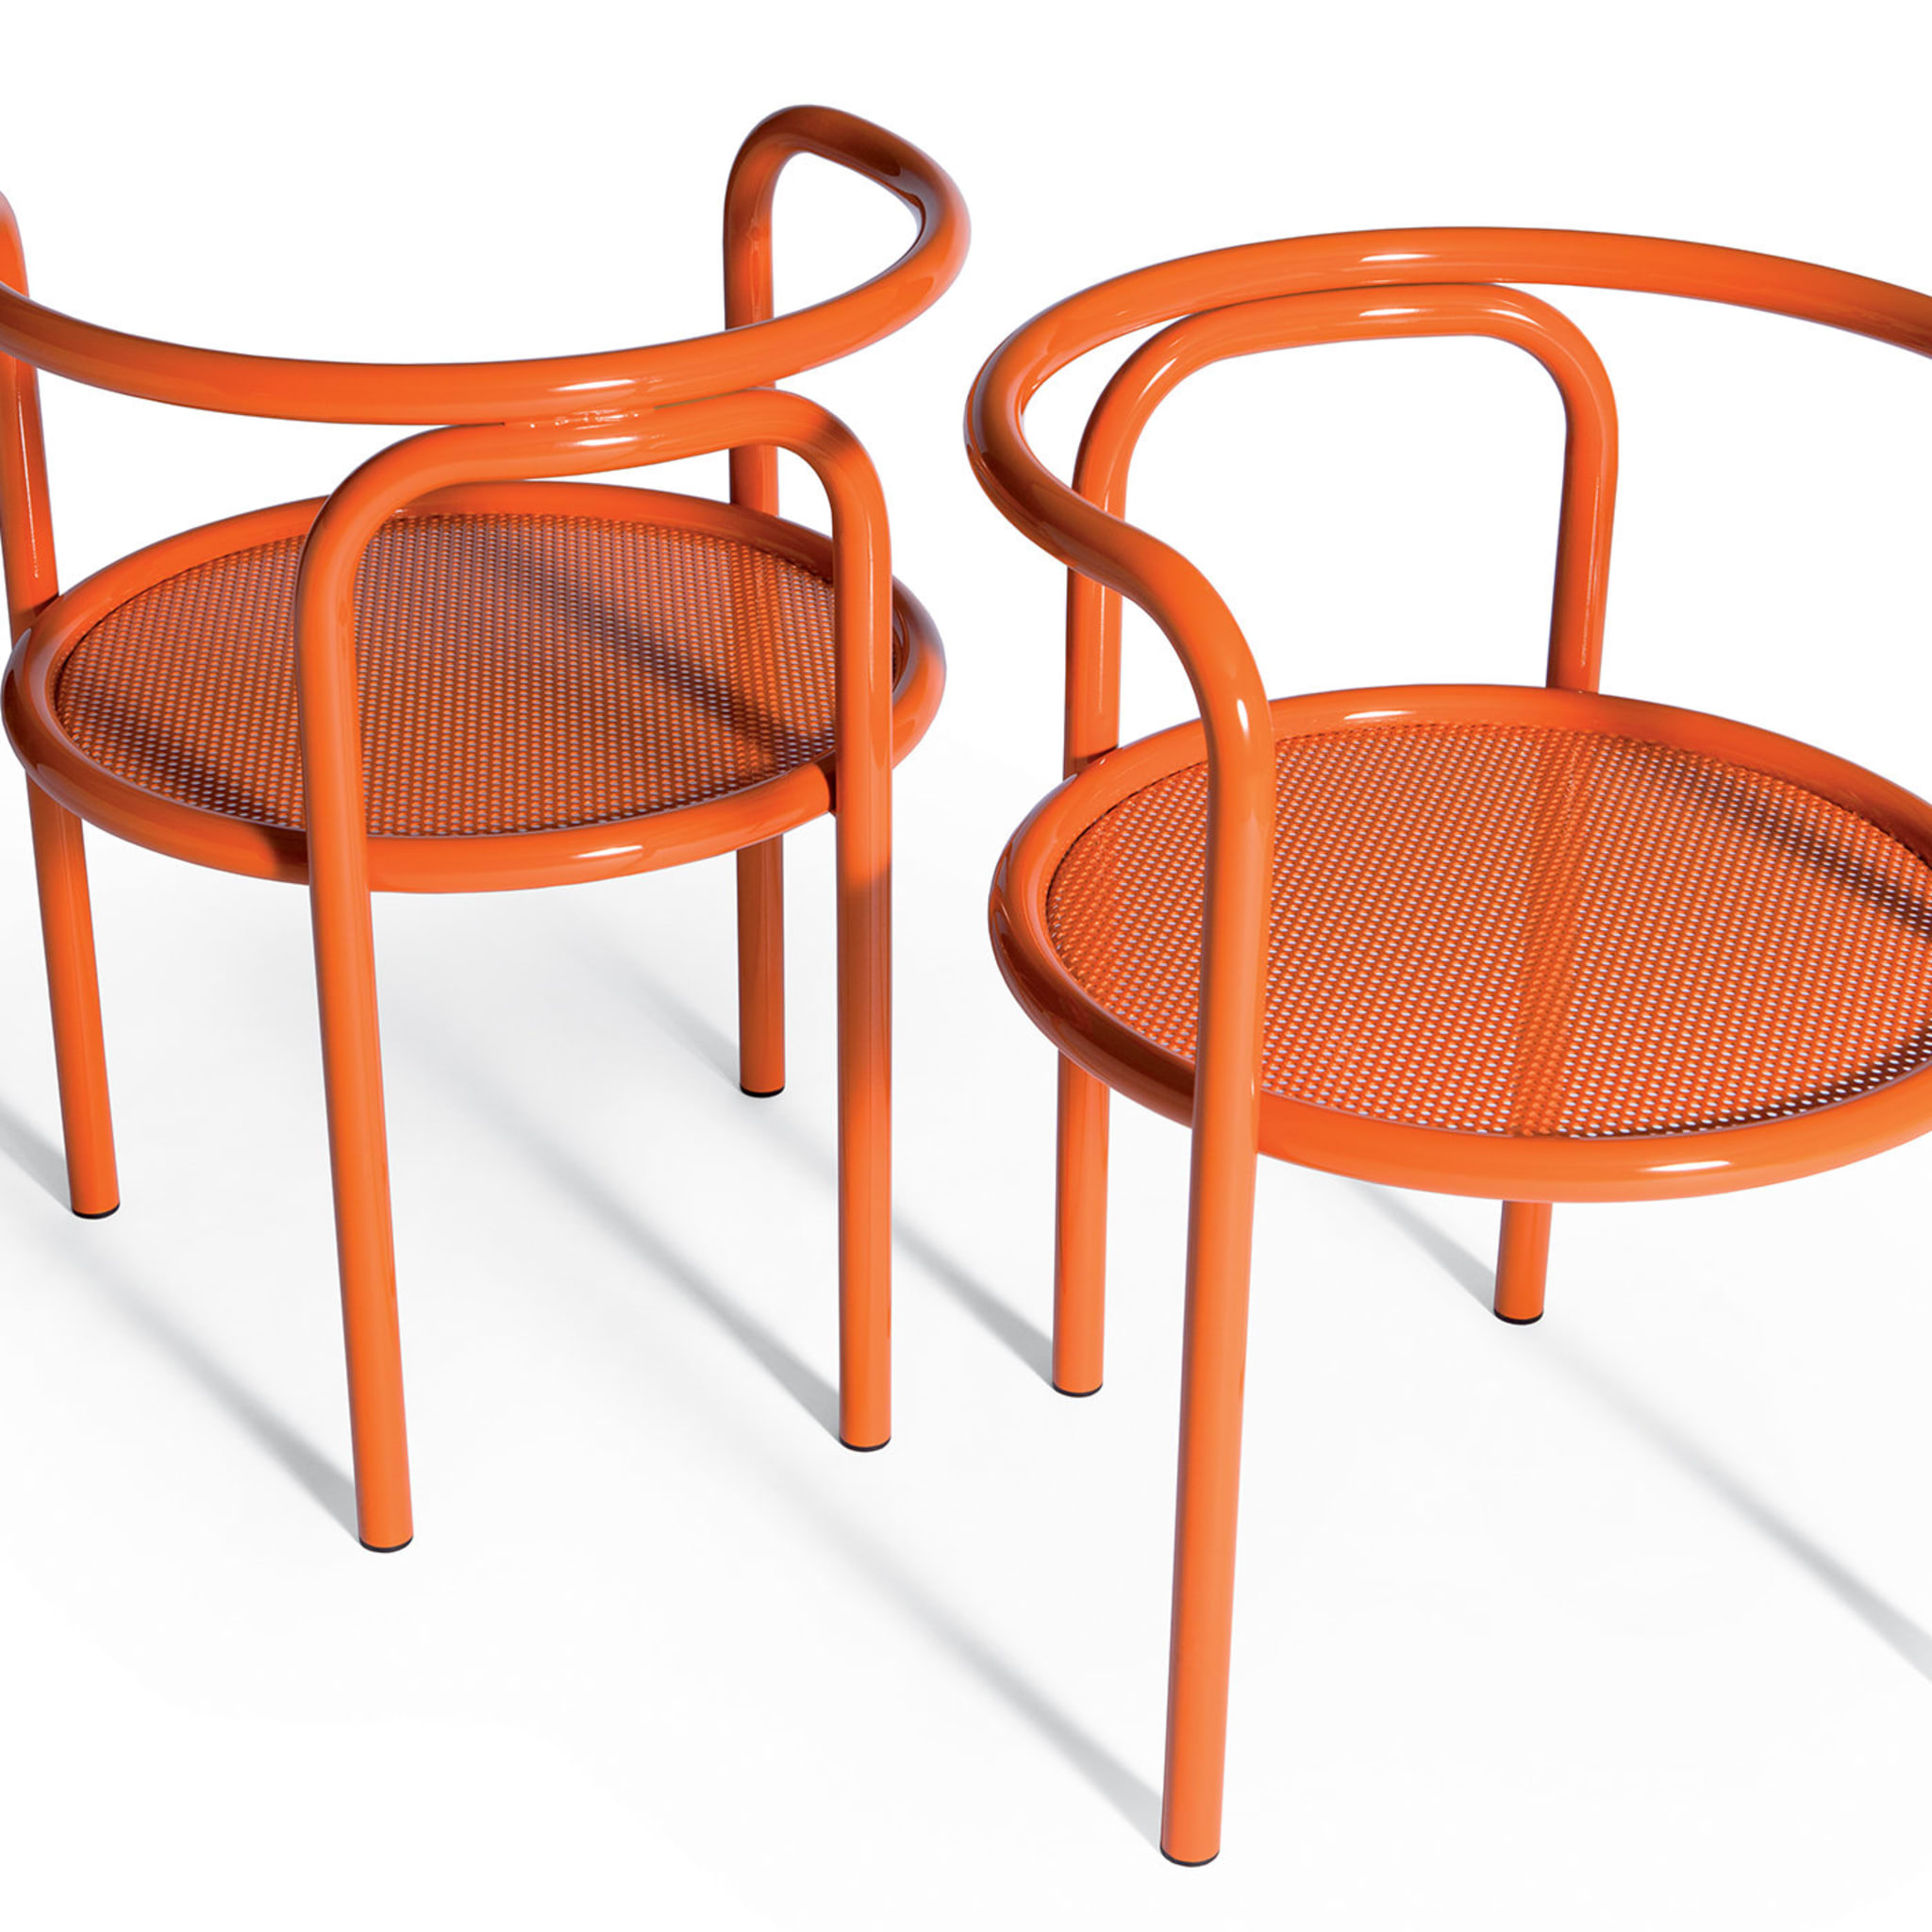 Locus Solus Orange Chair by Gae Aulenti - Alternative view 1